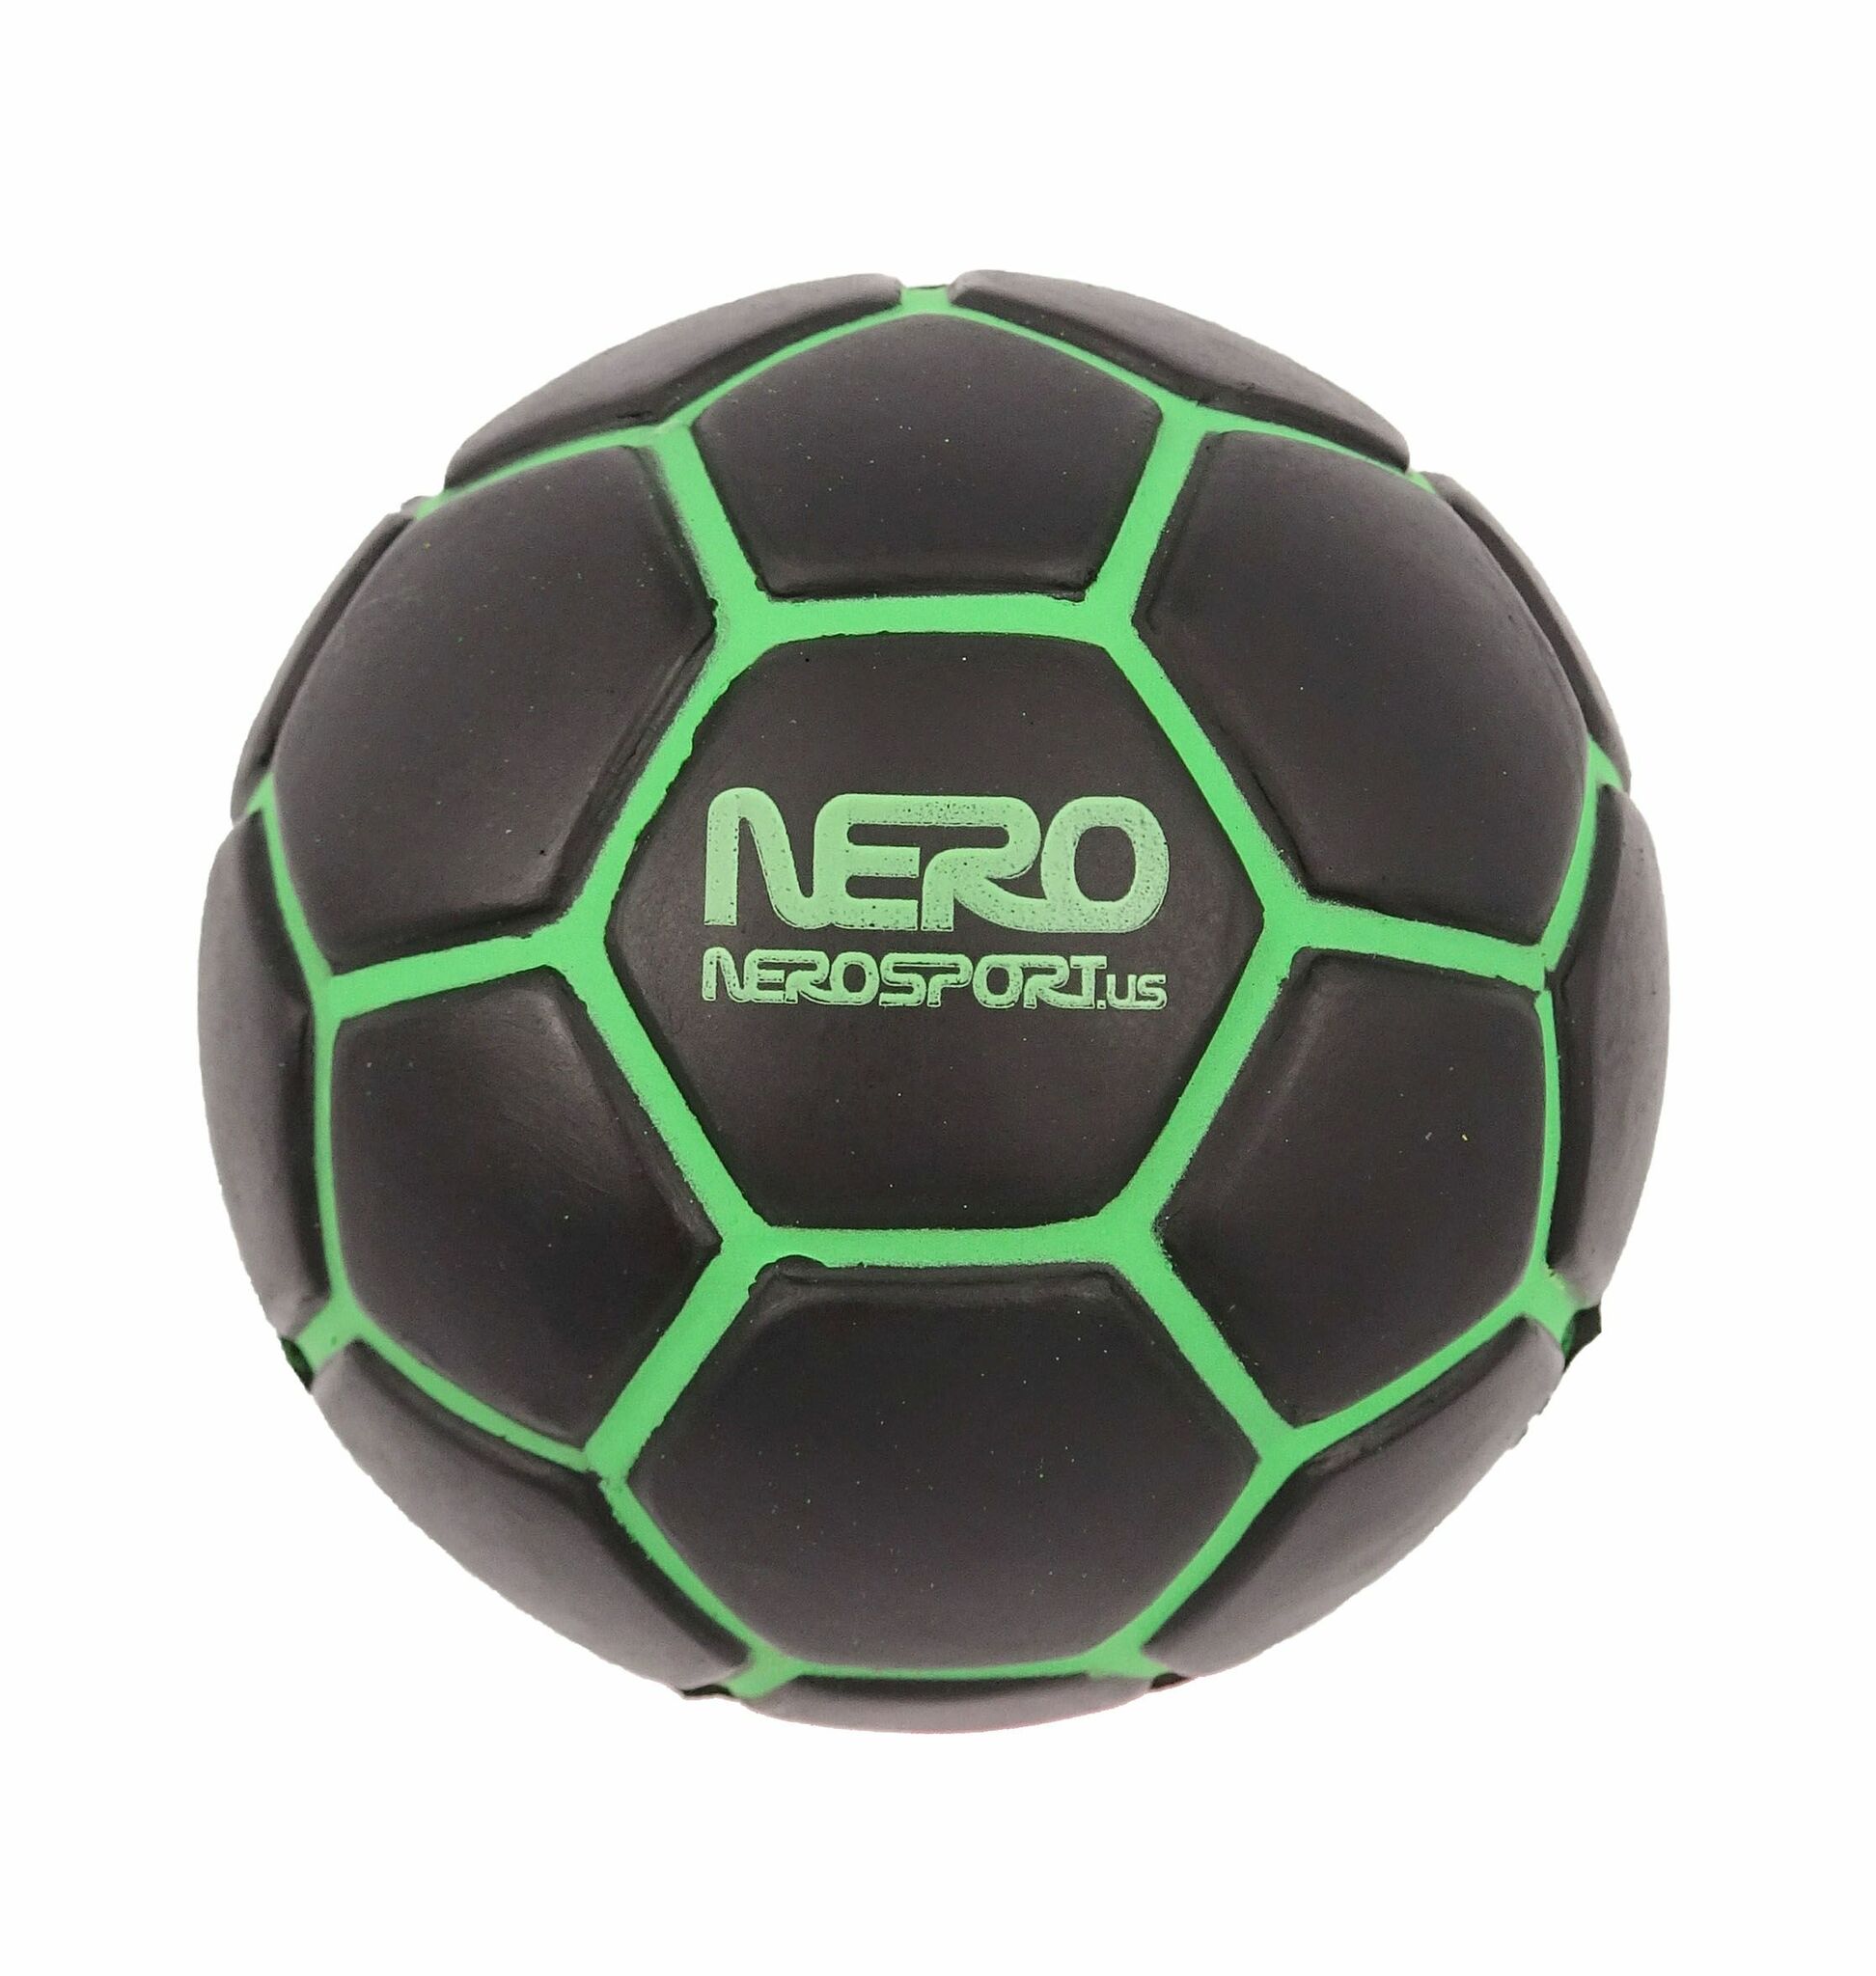 Nero Sport - Goal Black & Green | Studsboll | 6,8cm | Mjuk & lätt!